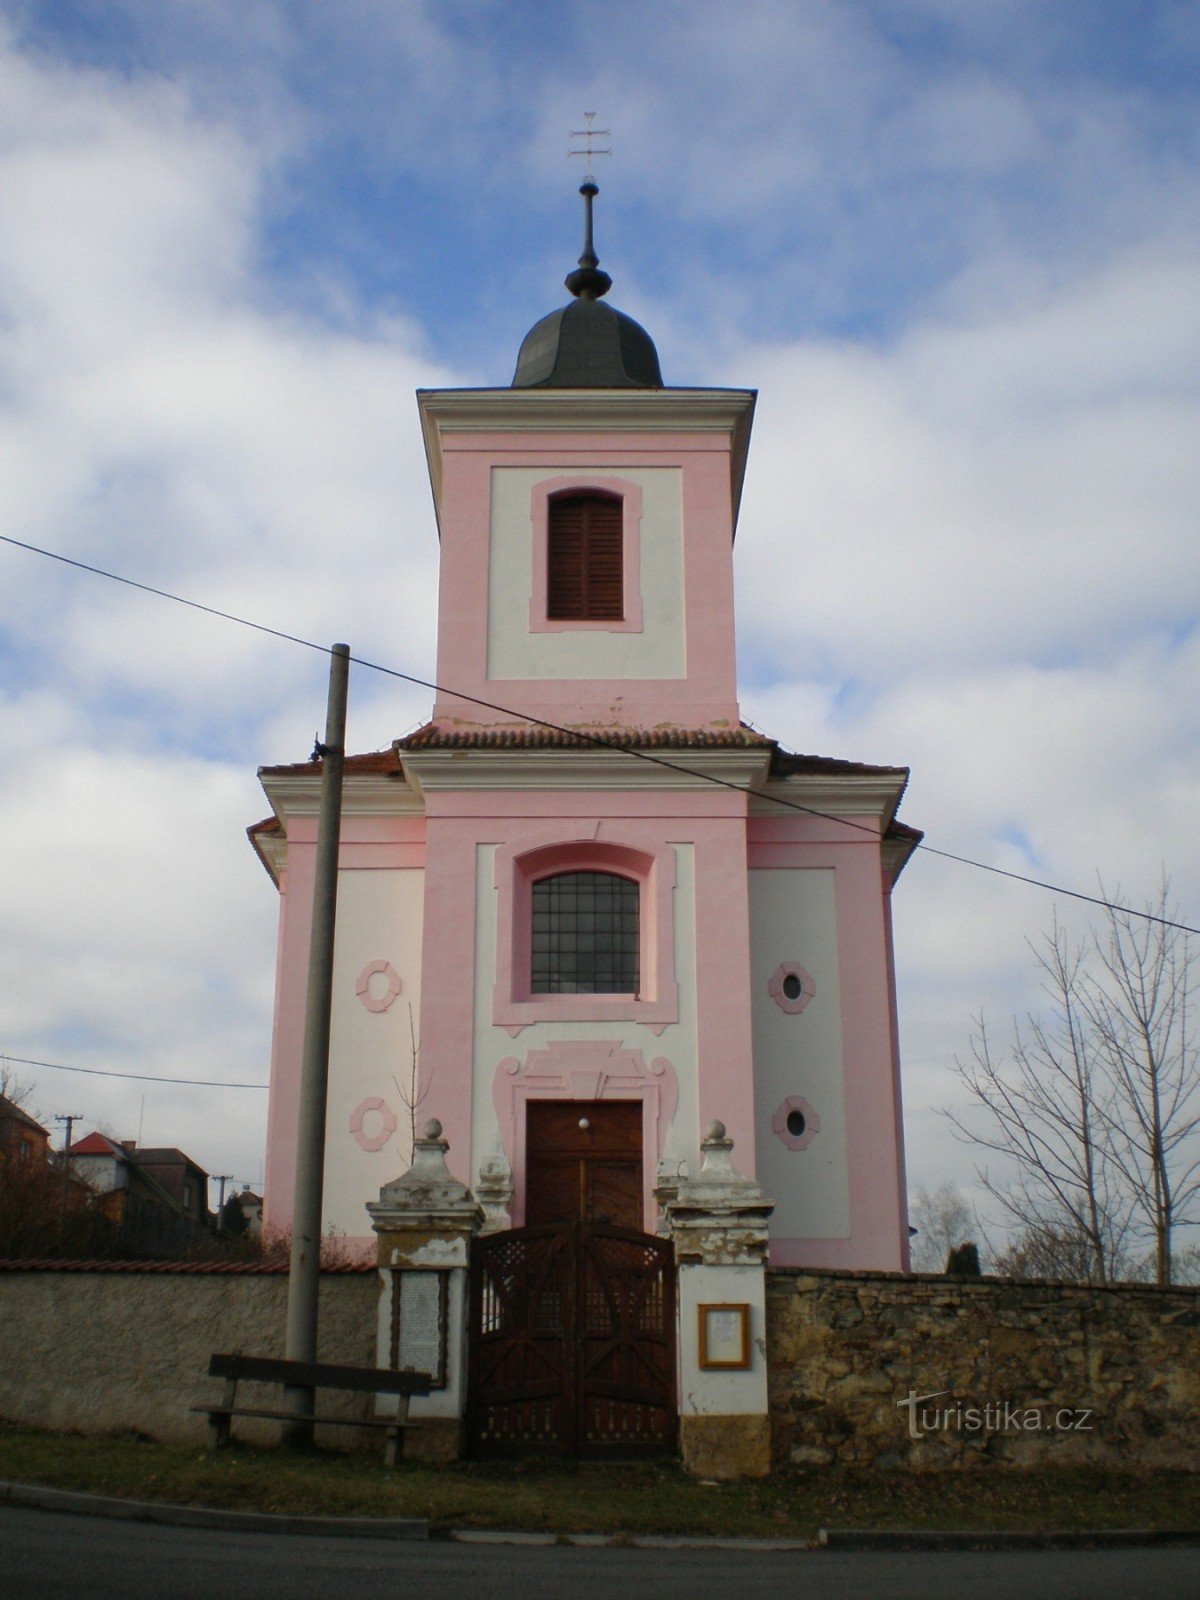 Grad - crkva sv. Jakub